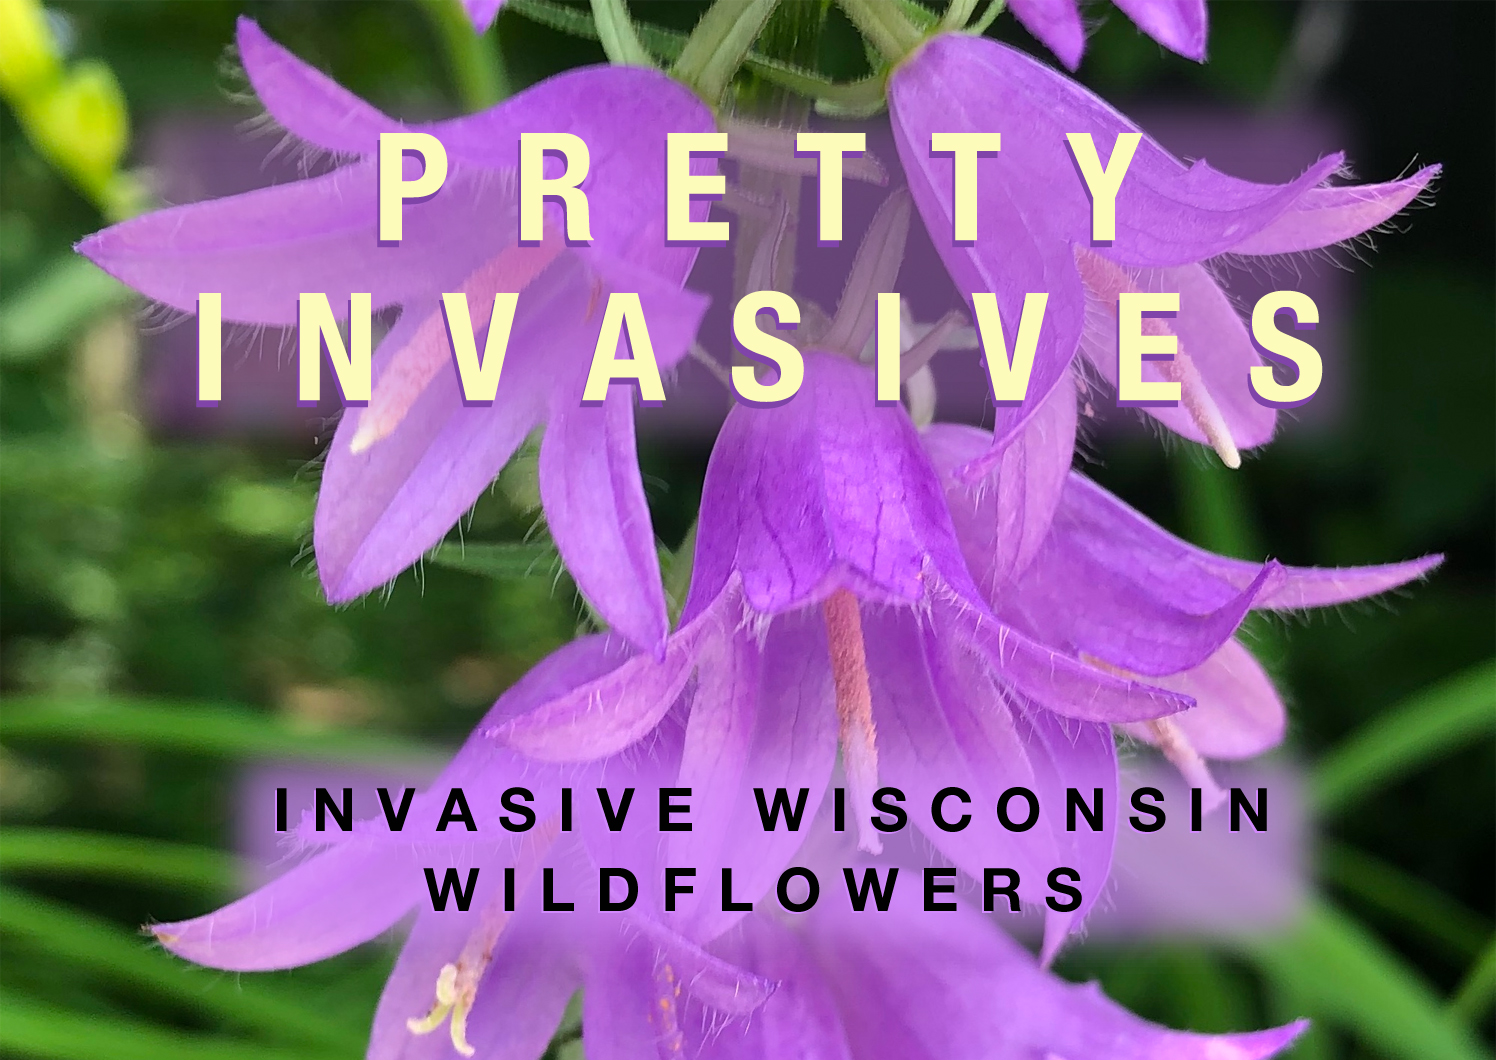 Pretty Wisconsin invasive wildflowers.